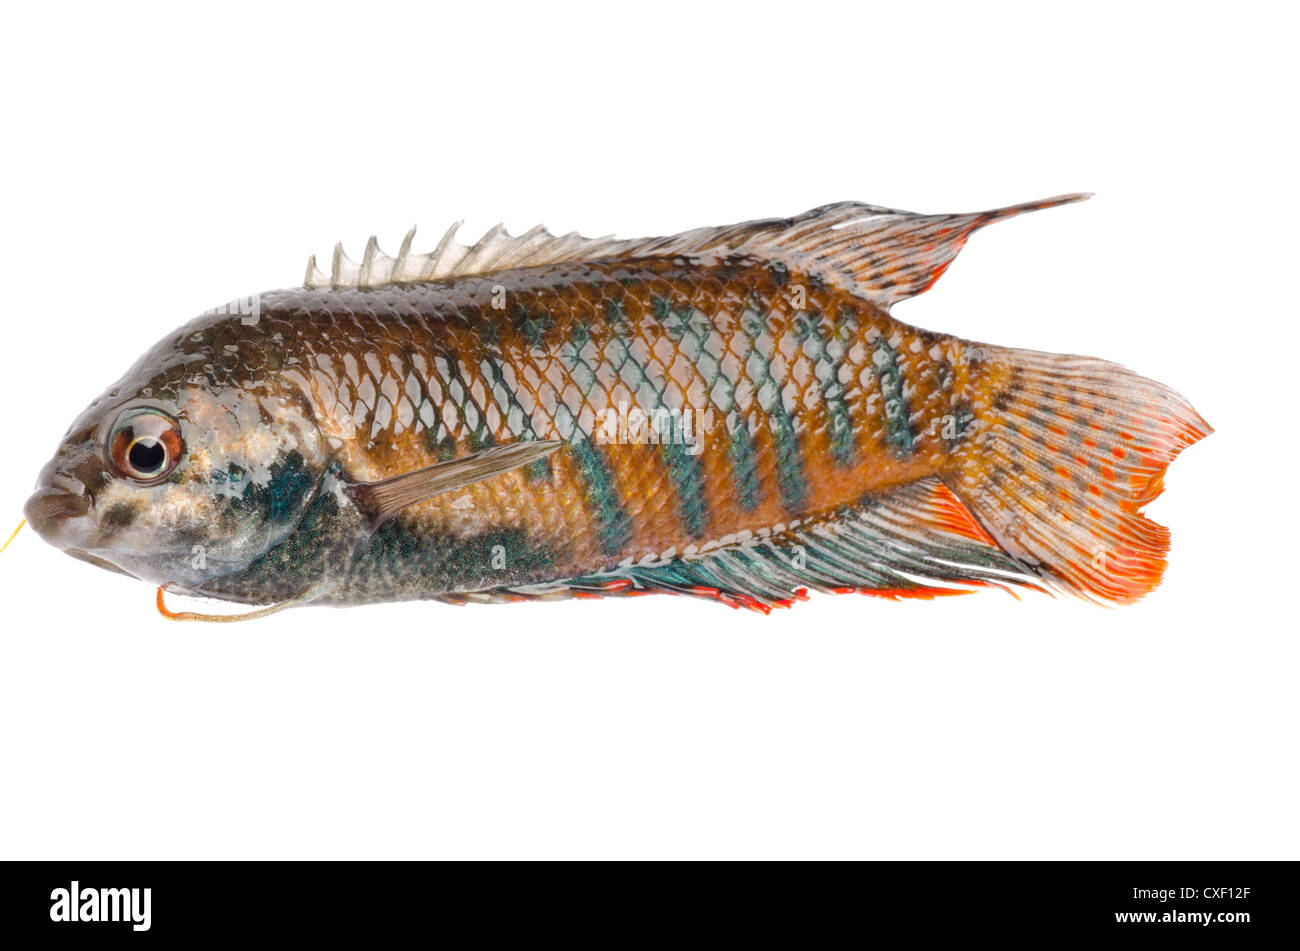 chinese fight fish Macropodus opercularis isolated on white Stock Photo